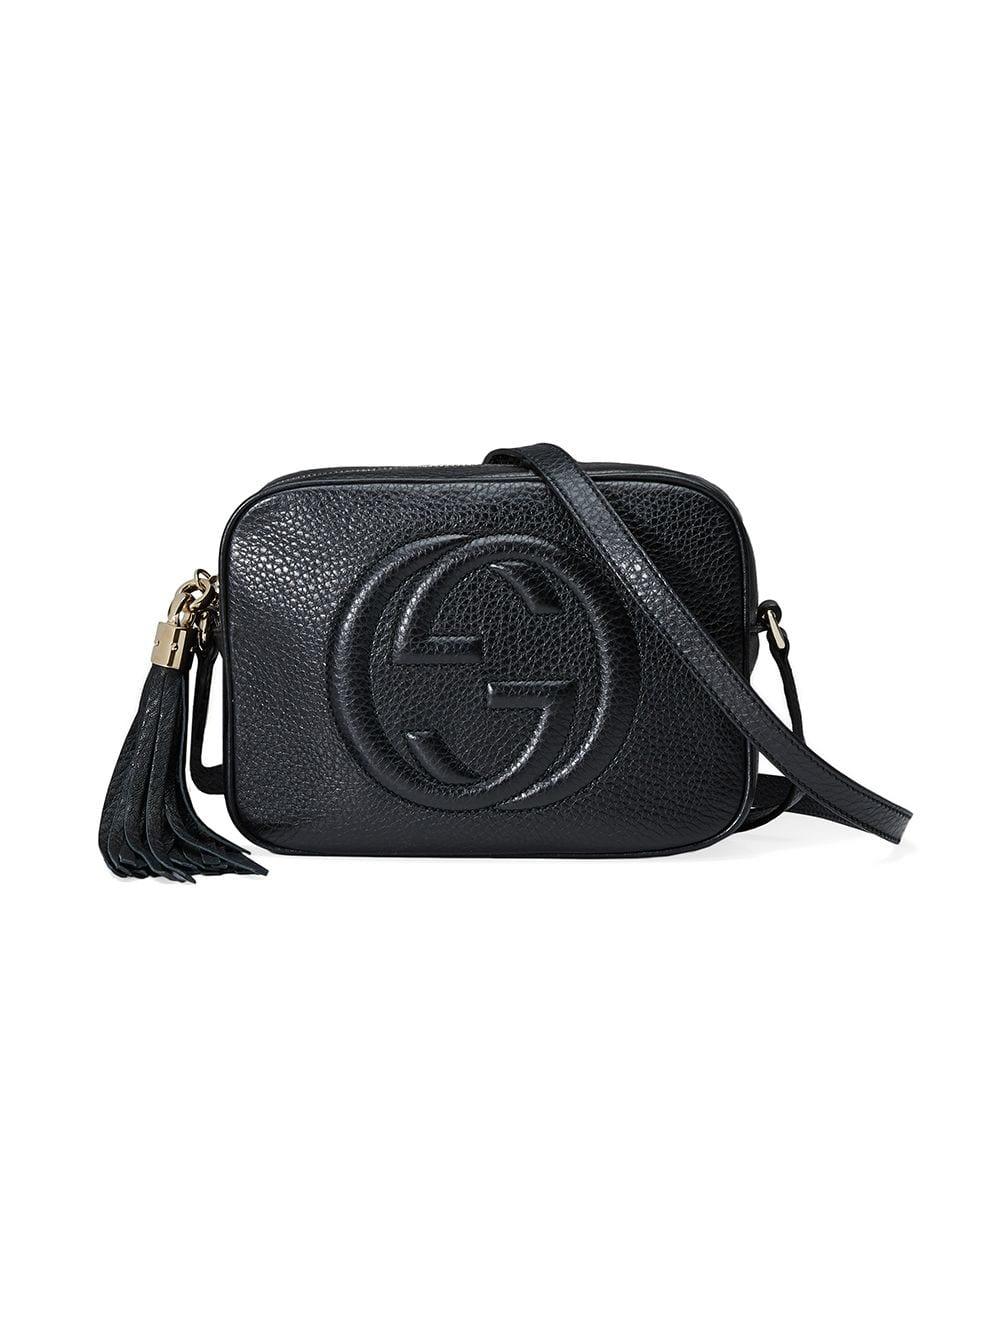 Gucci Small Purse Bag Price | semashow.com